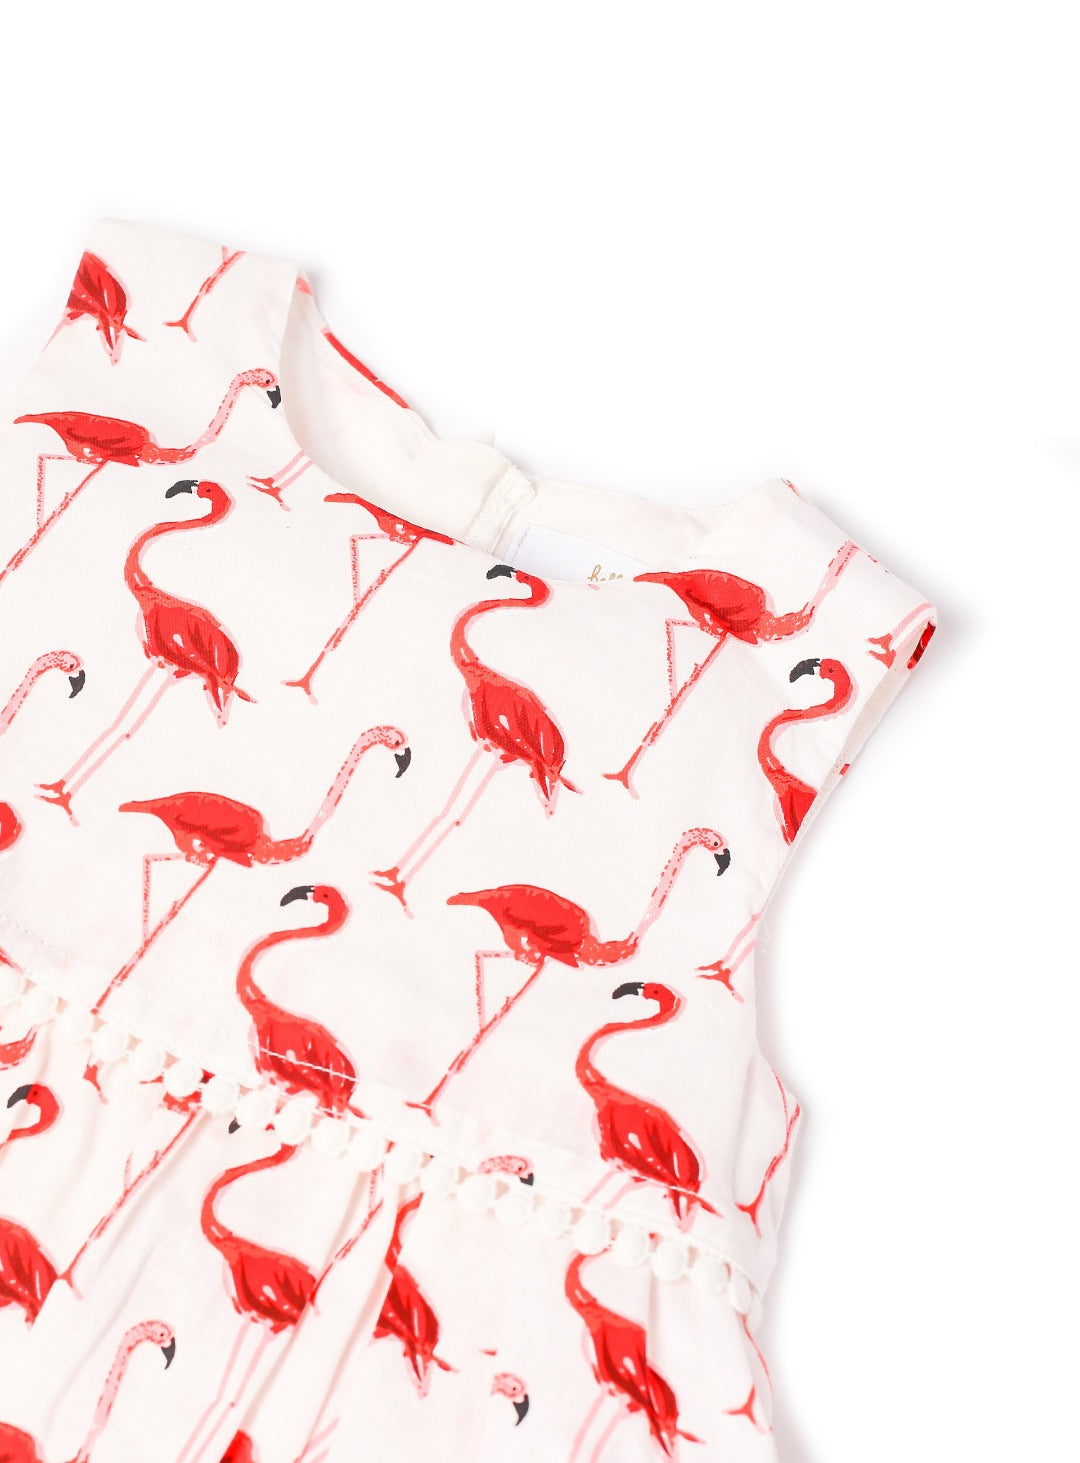 white sleeveless dress with red flamingo pattern